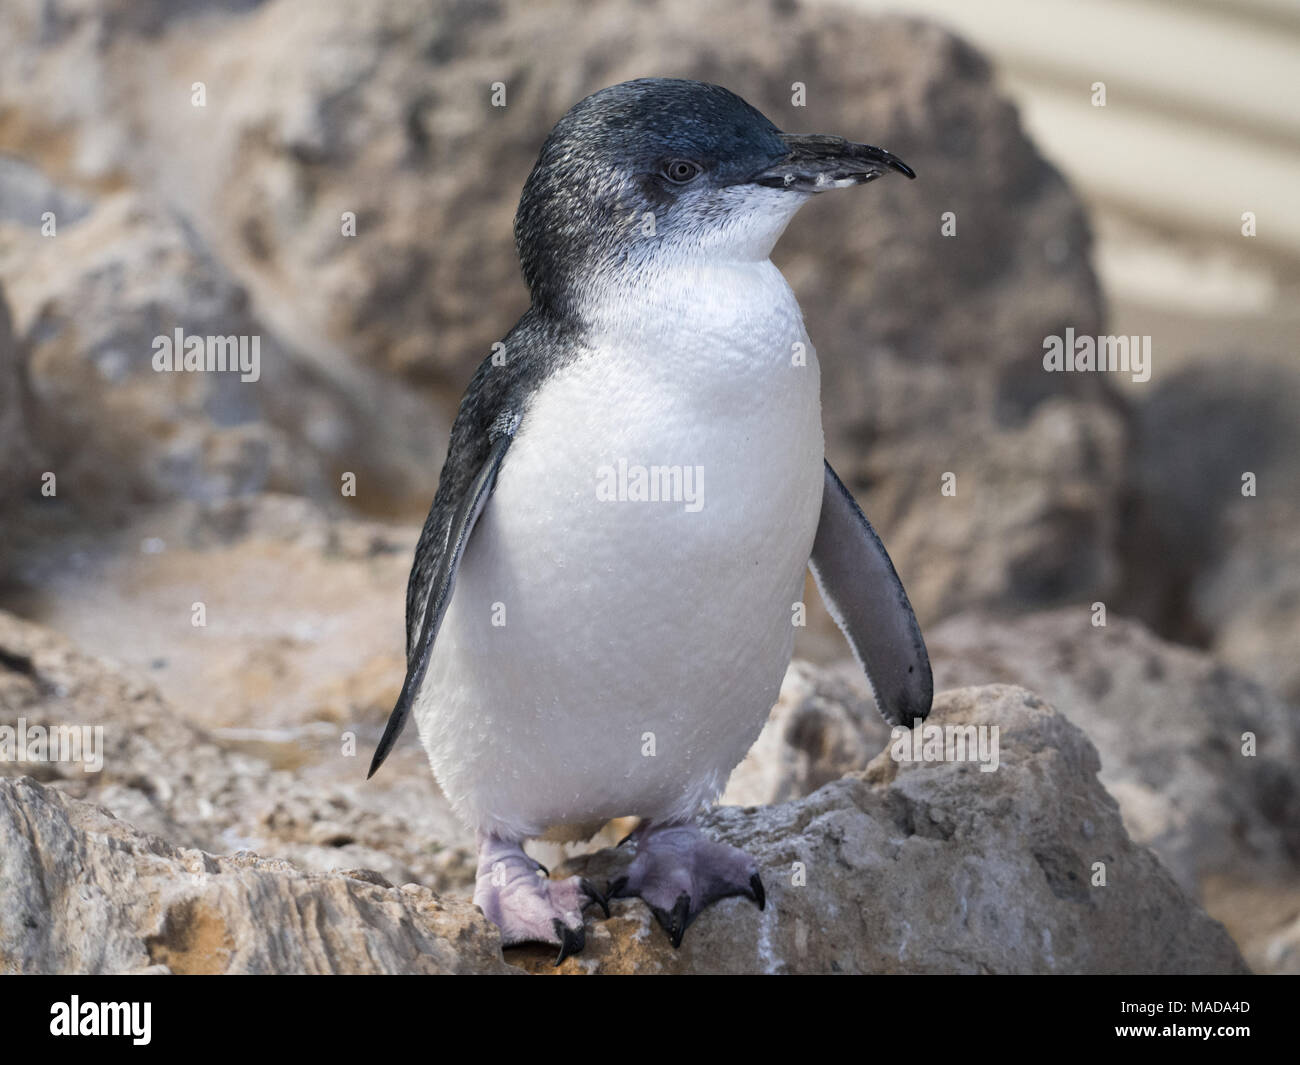 Penguin in the Discovery Centre, Penguin Island, Western Australia Stock Photo